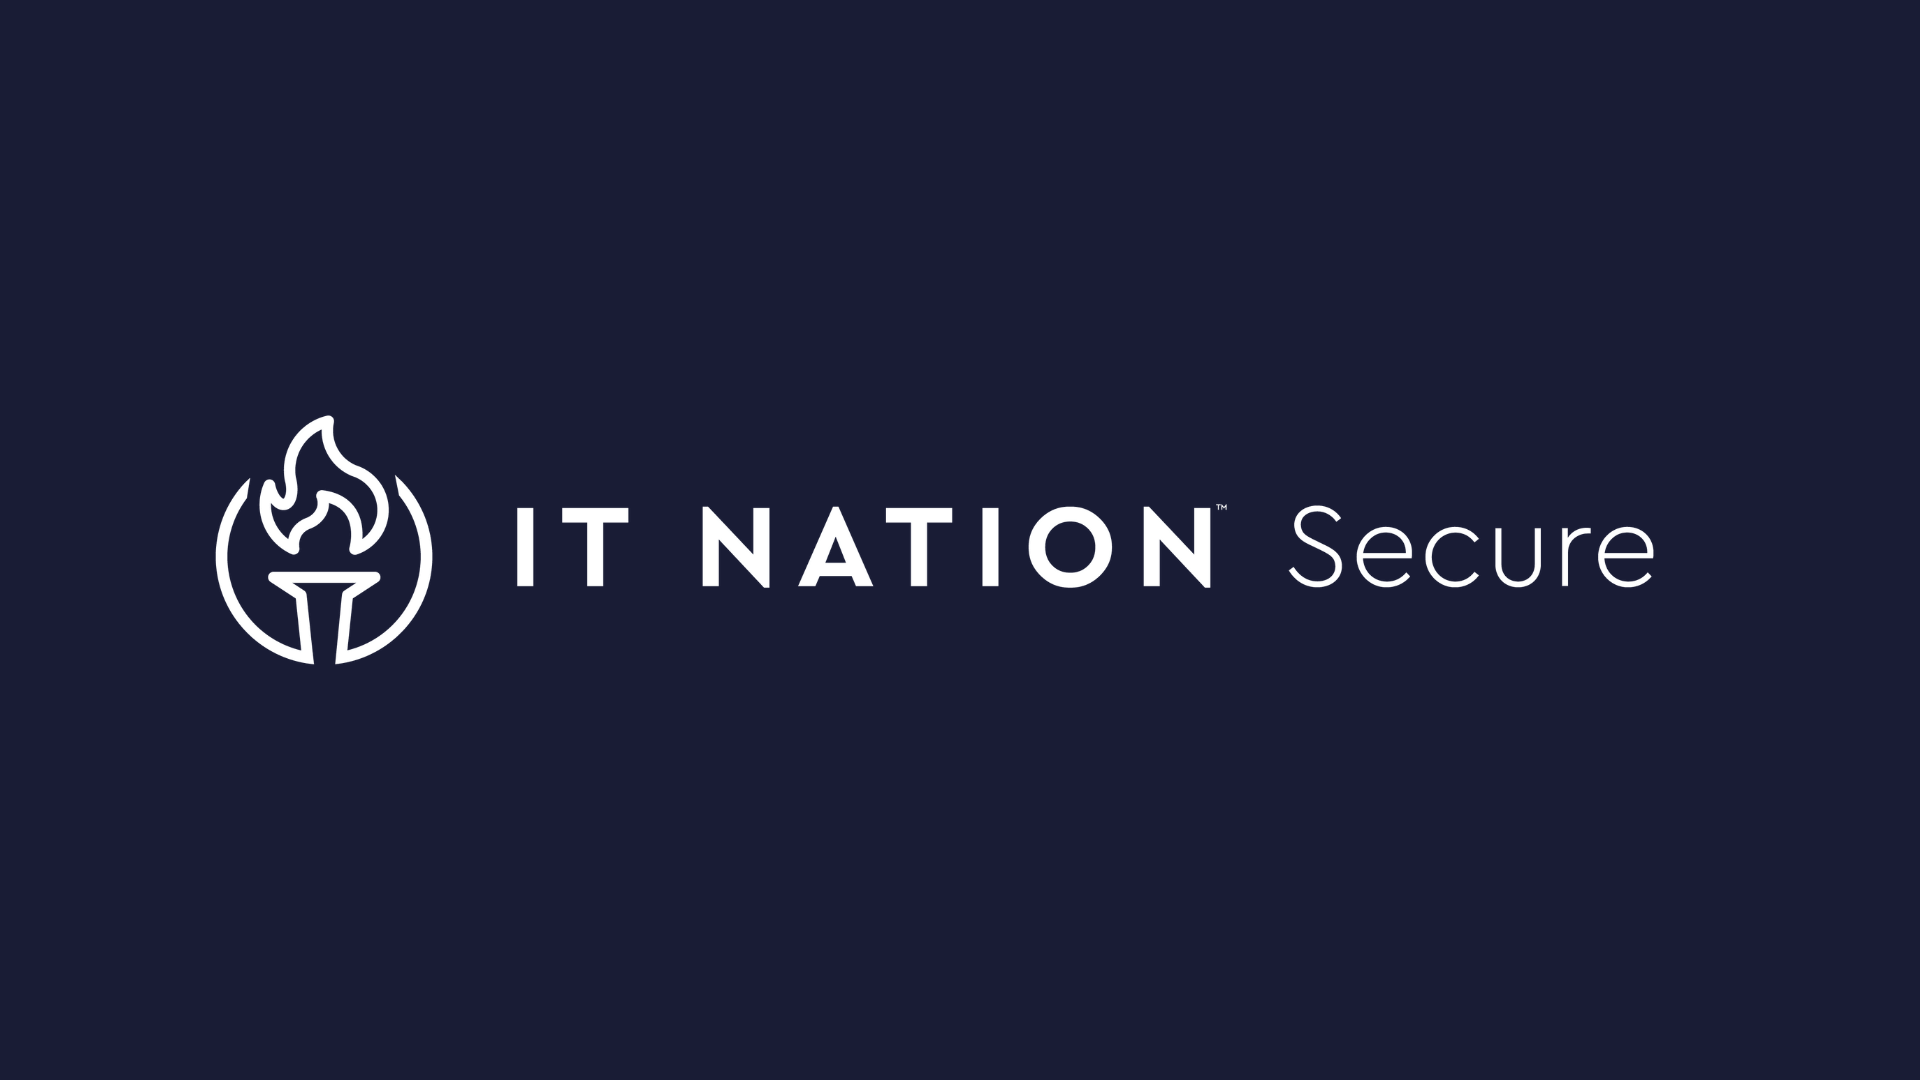 IT Nation Secure logo